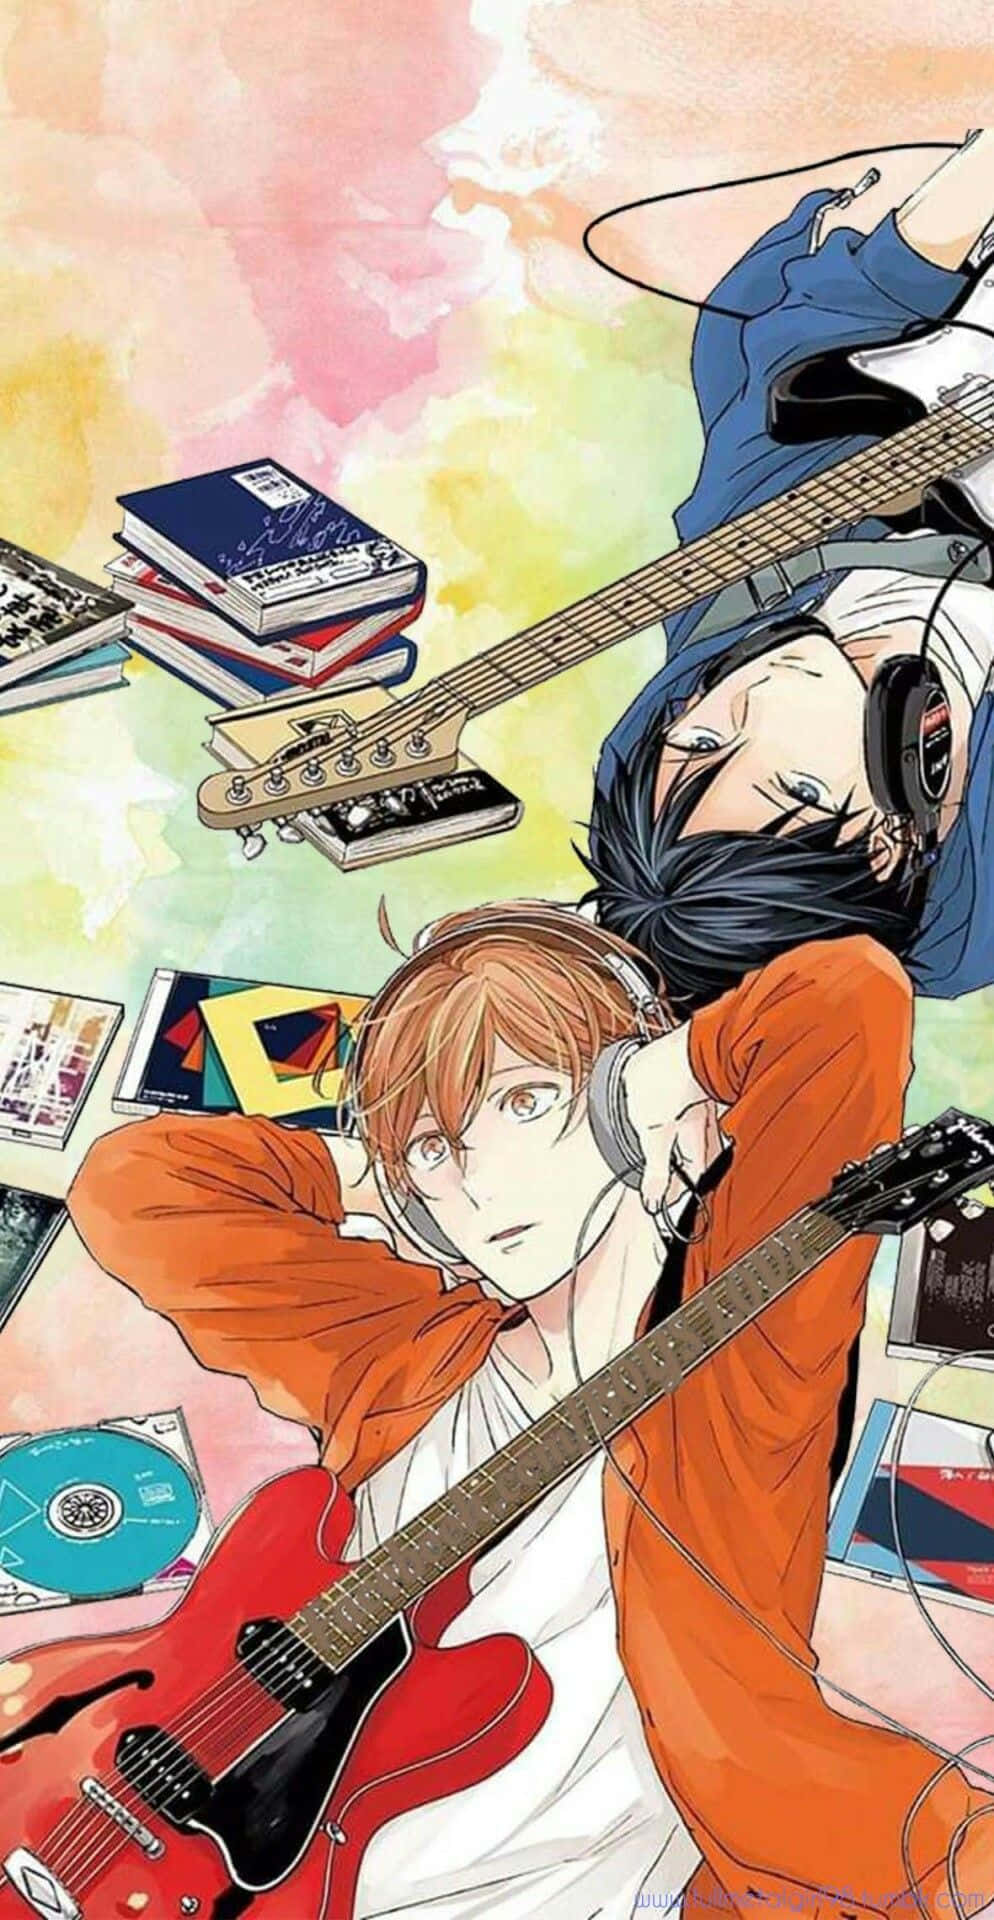 Celebrating Pride and Love of LGBT Anime Wallpaper